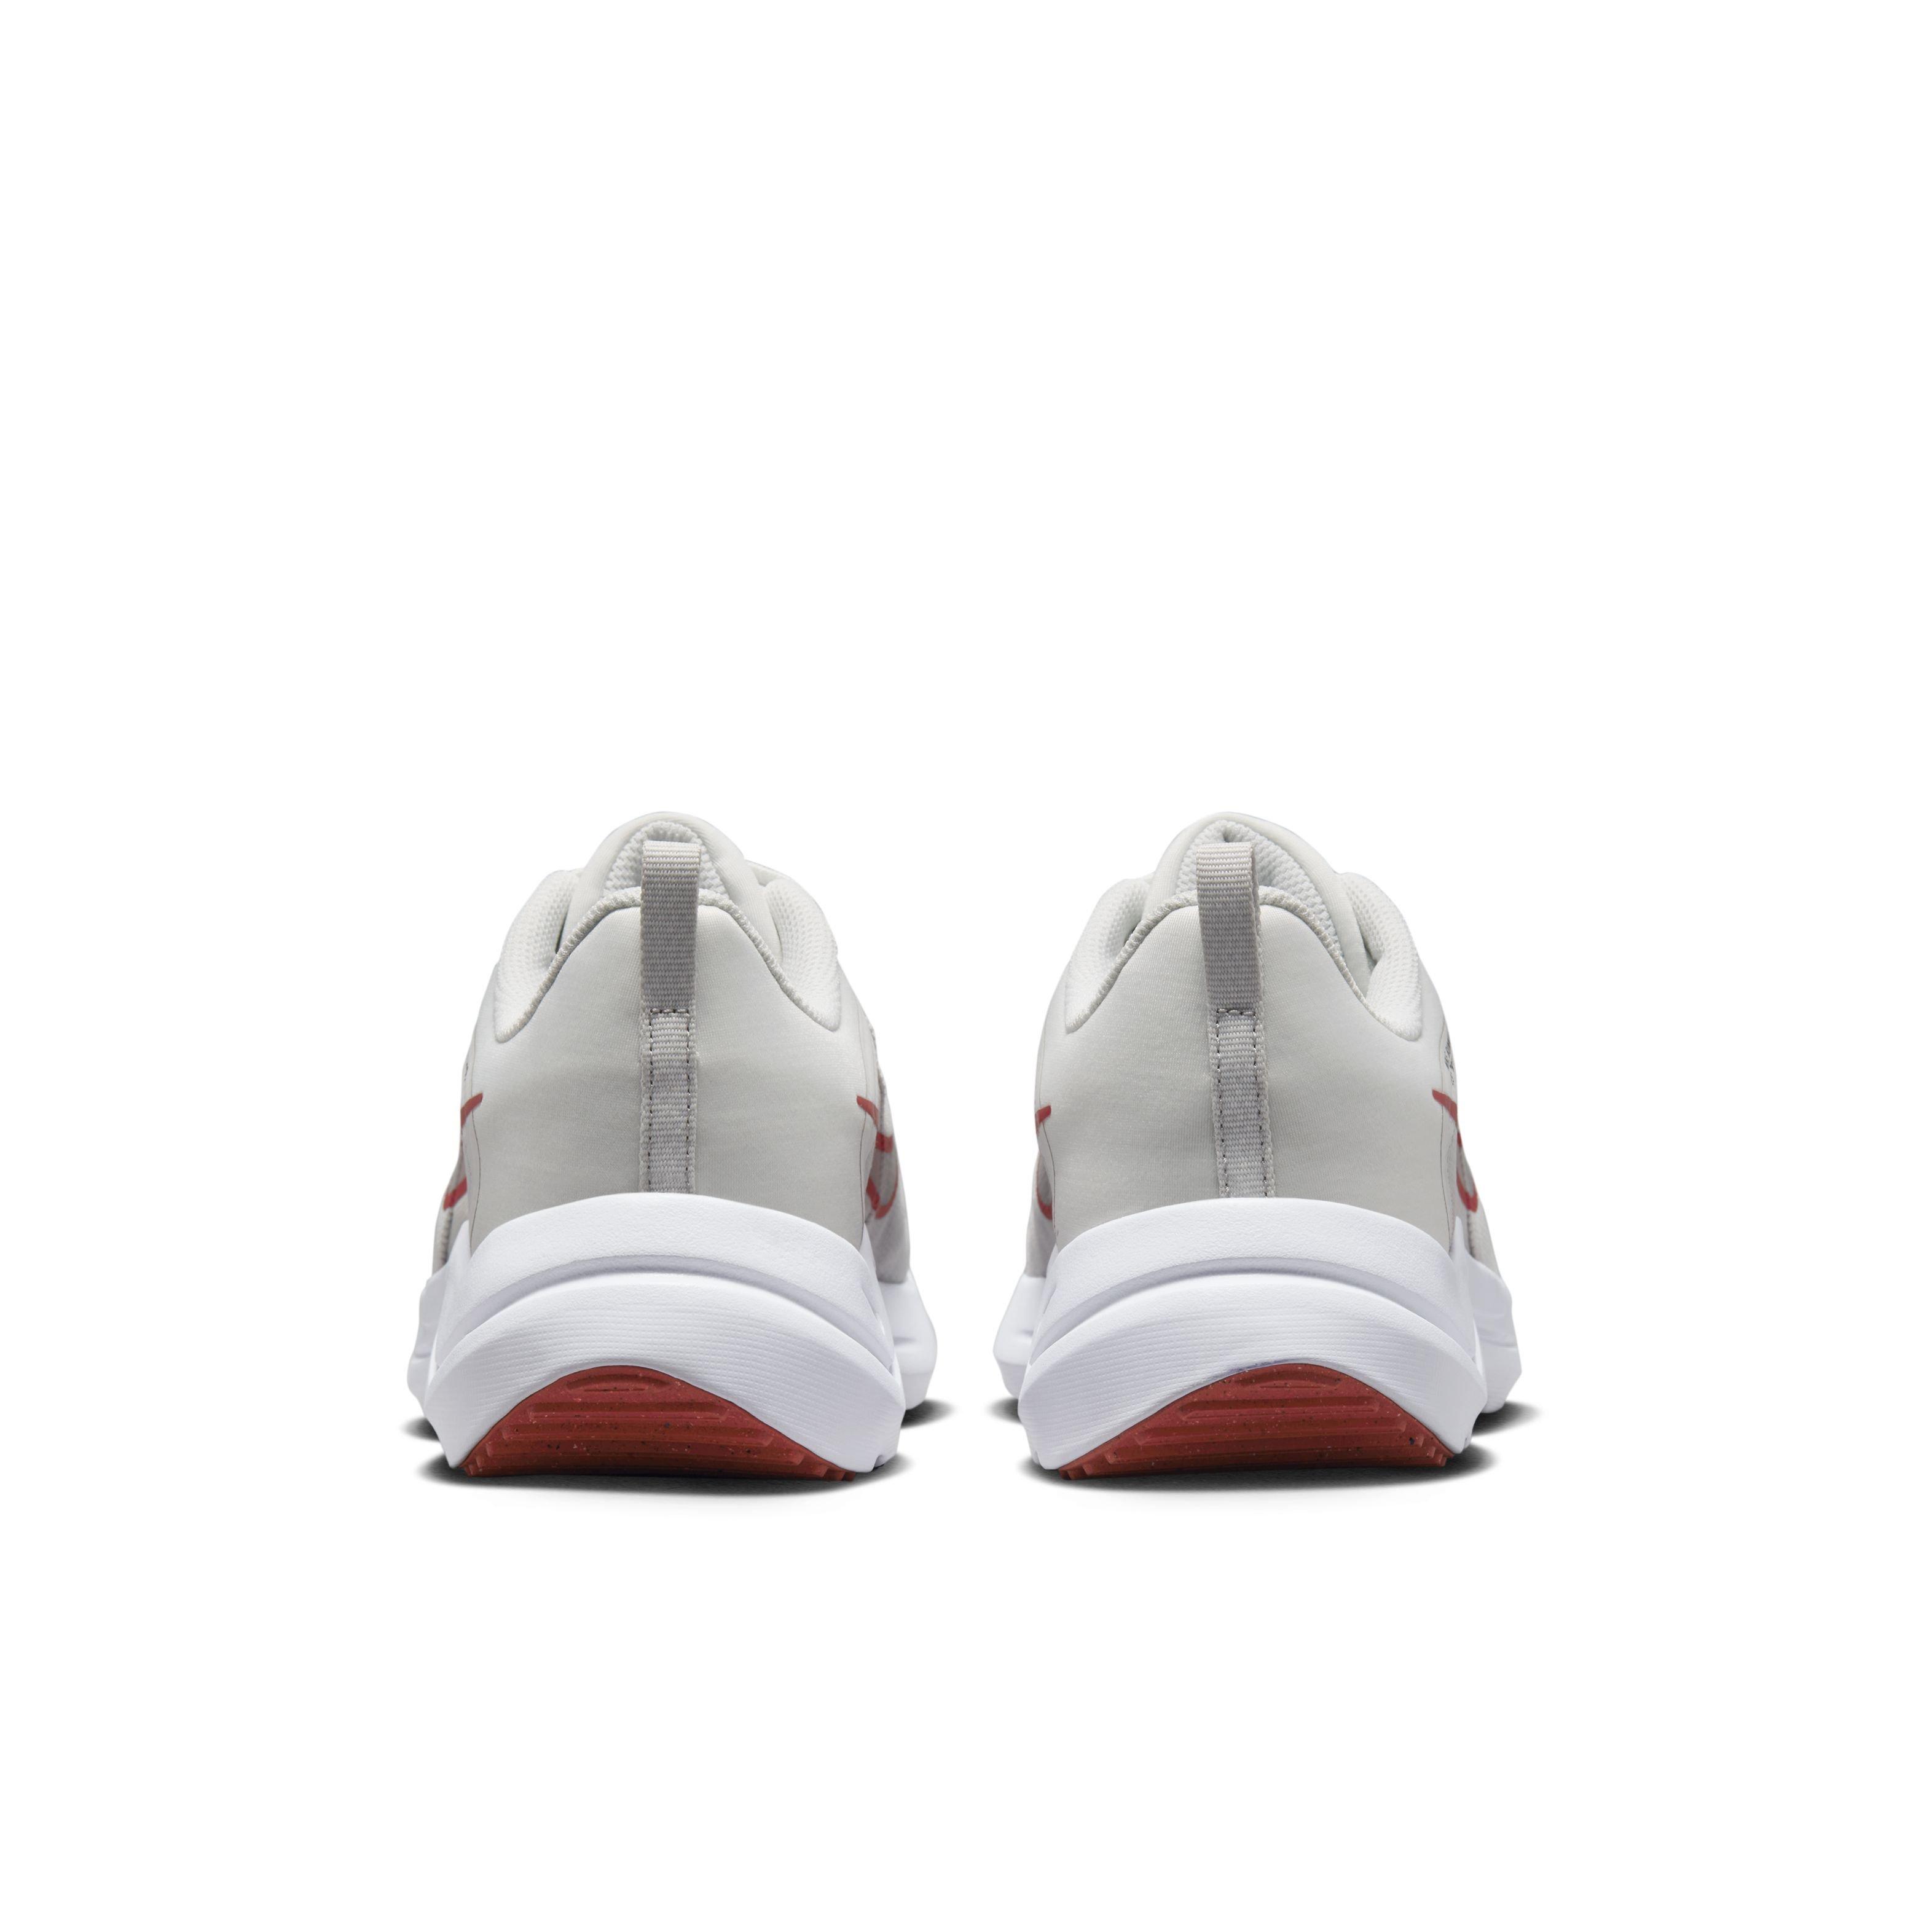 Jordan 14 Retro SE Black Anthracite Shoes For Men, Custom Painted, Size 10